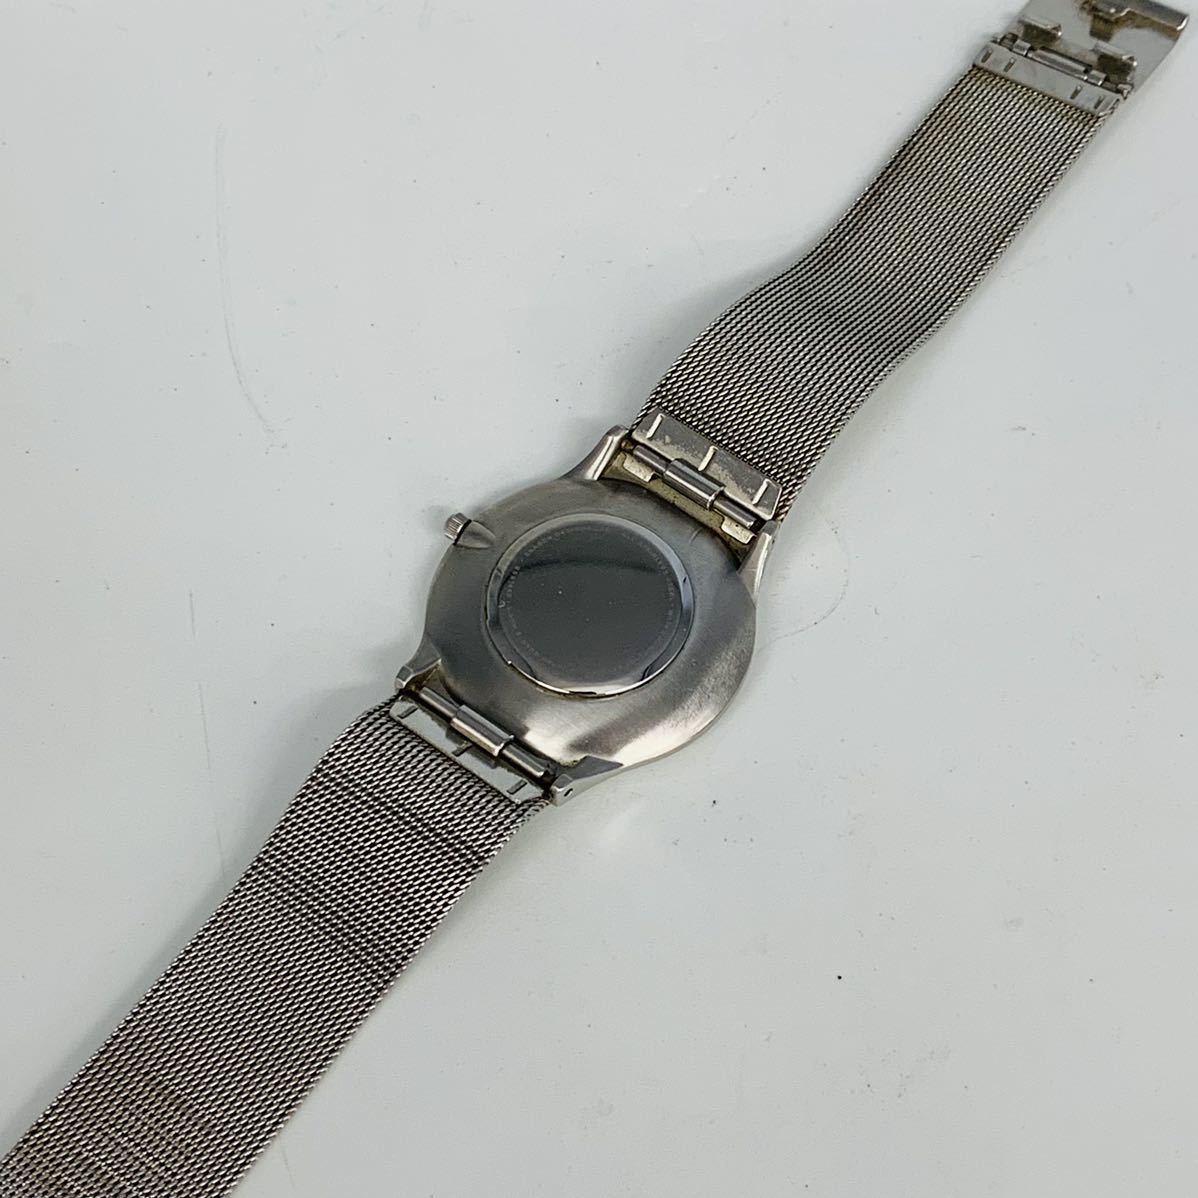 SKAGEN スカーゲン メンズ腕時計 腕時計 時計 ユニセックス クオーツ クォーツ 黒文字盤 3針 ステンレススチール デンマーク TI 69_画像7